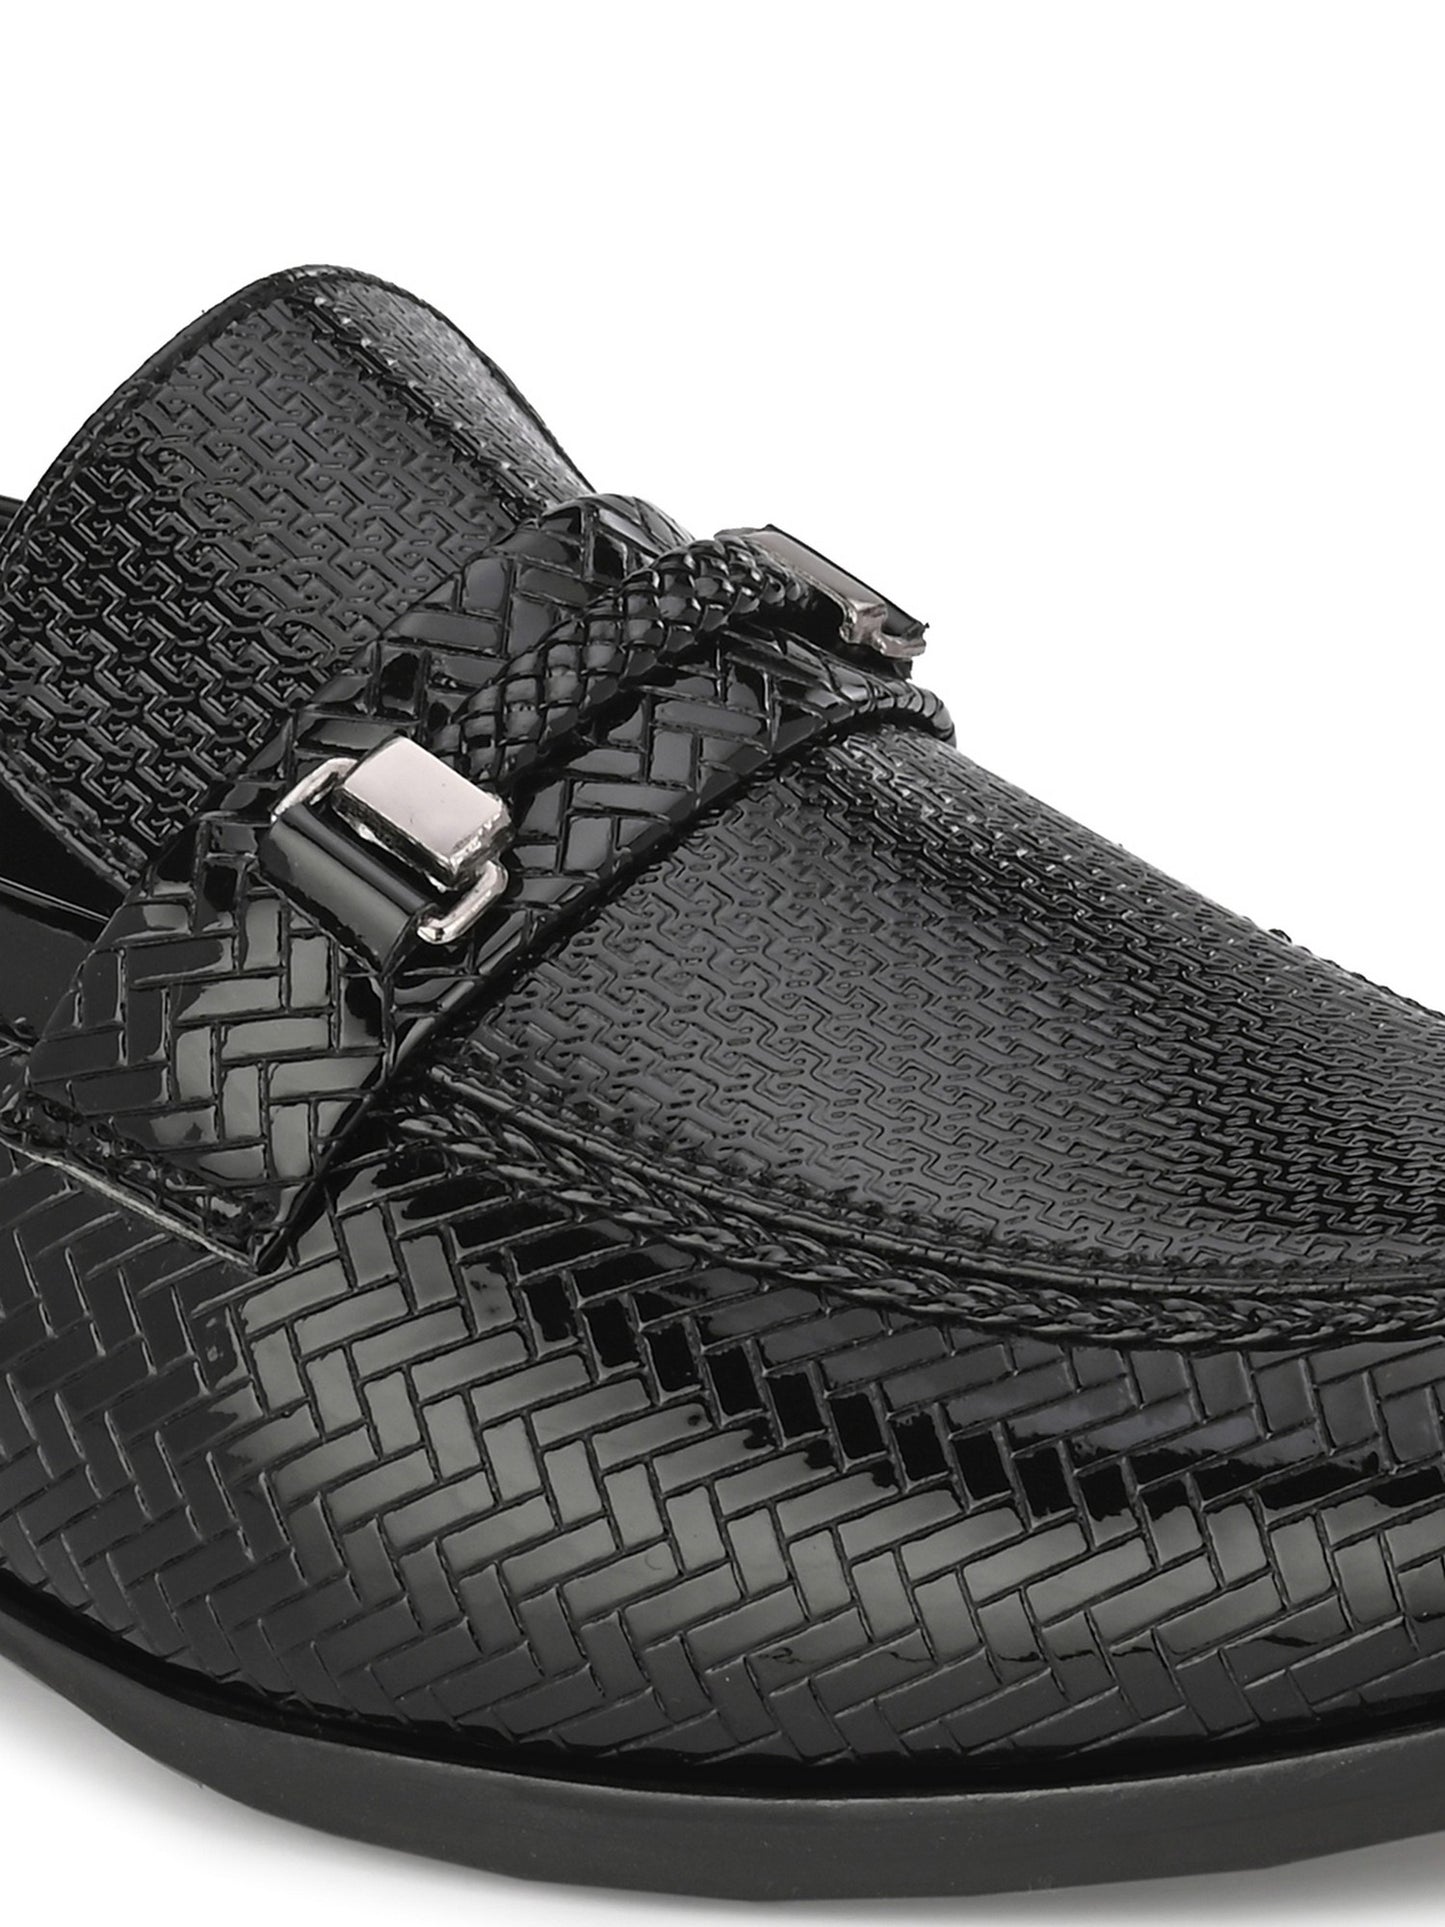 Guava Men's Black Slip On Semi Formal Shoes (GV15JA818)